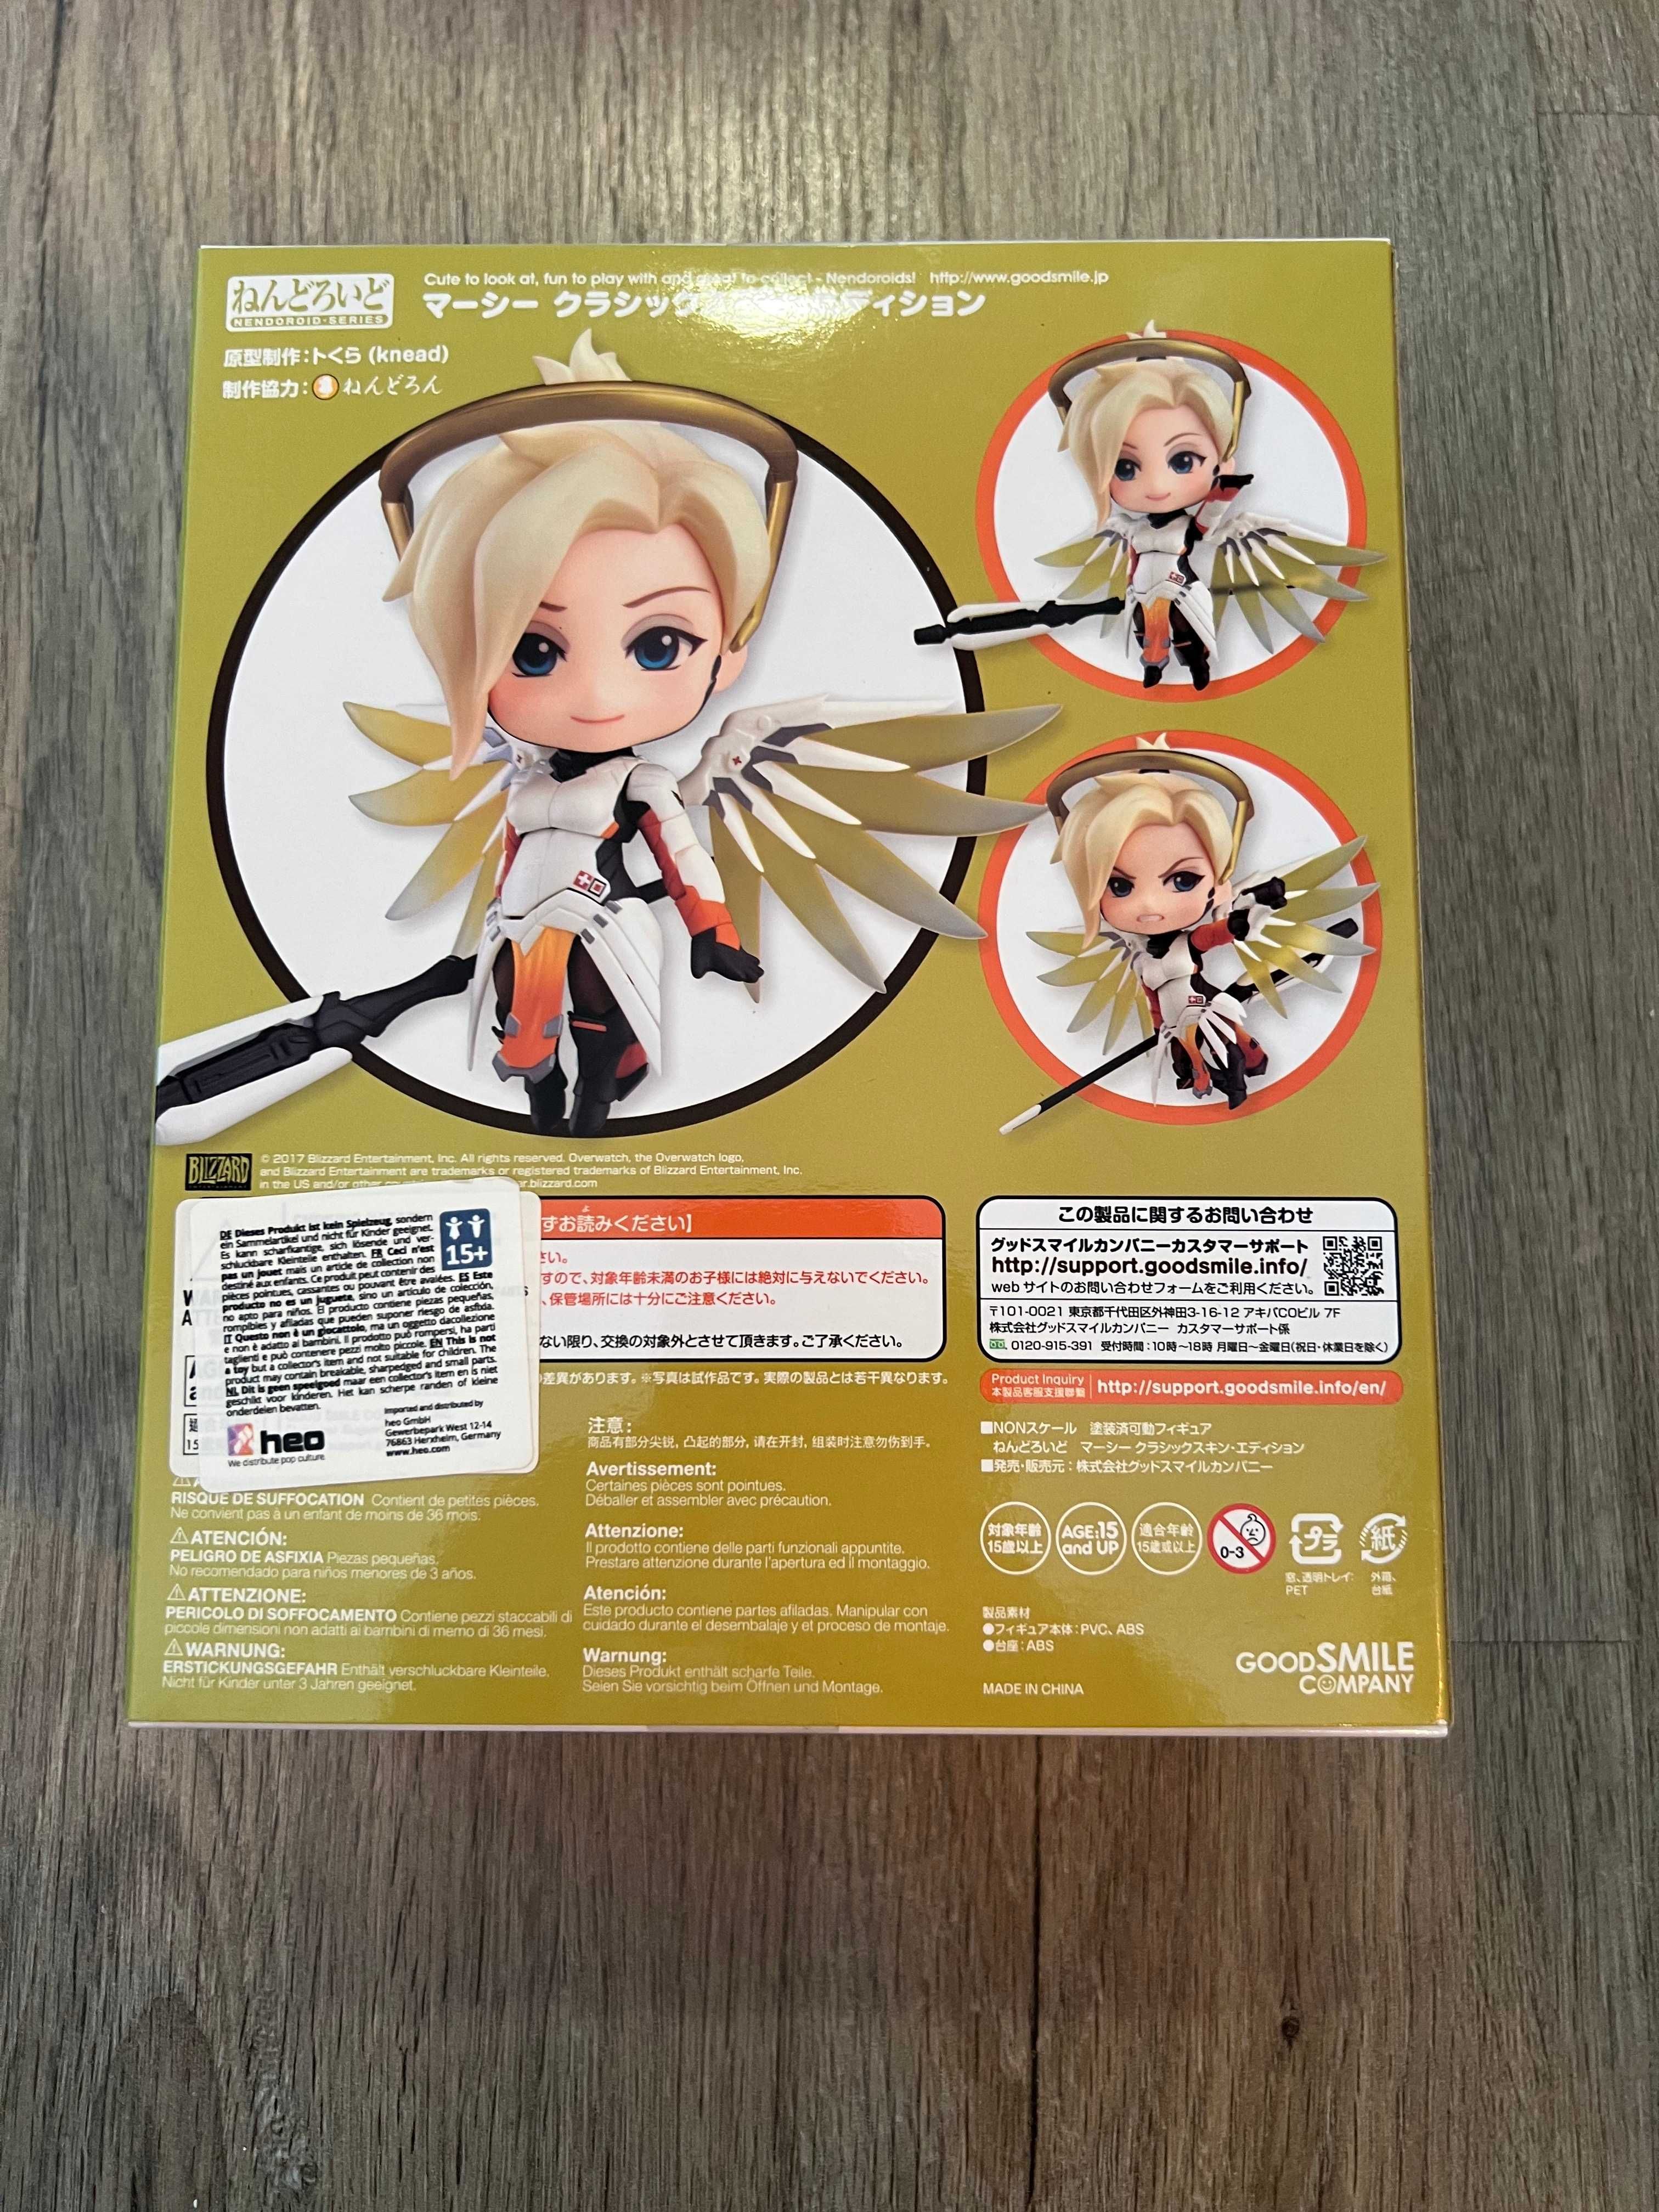 Nendoroid 790 Mercy *MINT CONDITION* - Japan Import - Novo e Selado